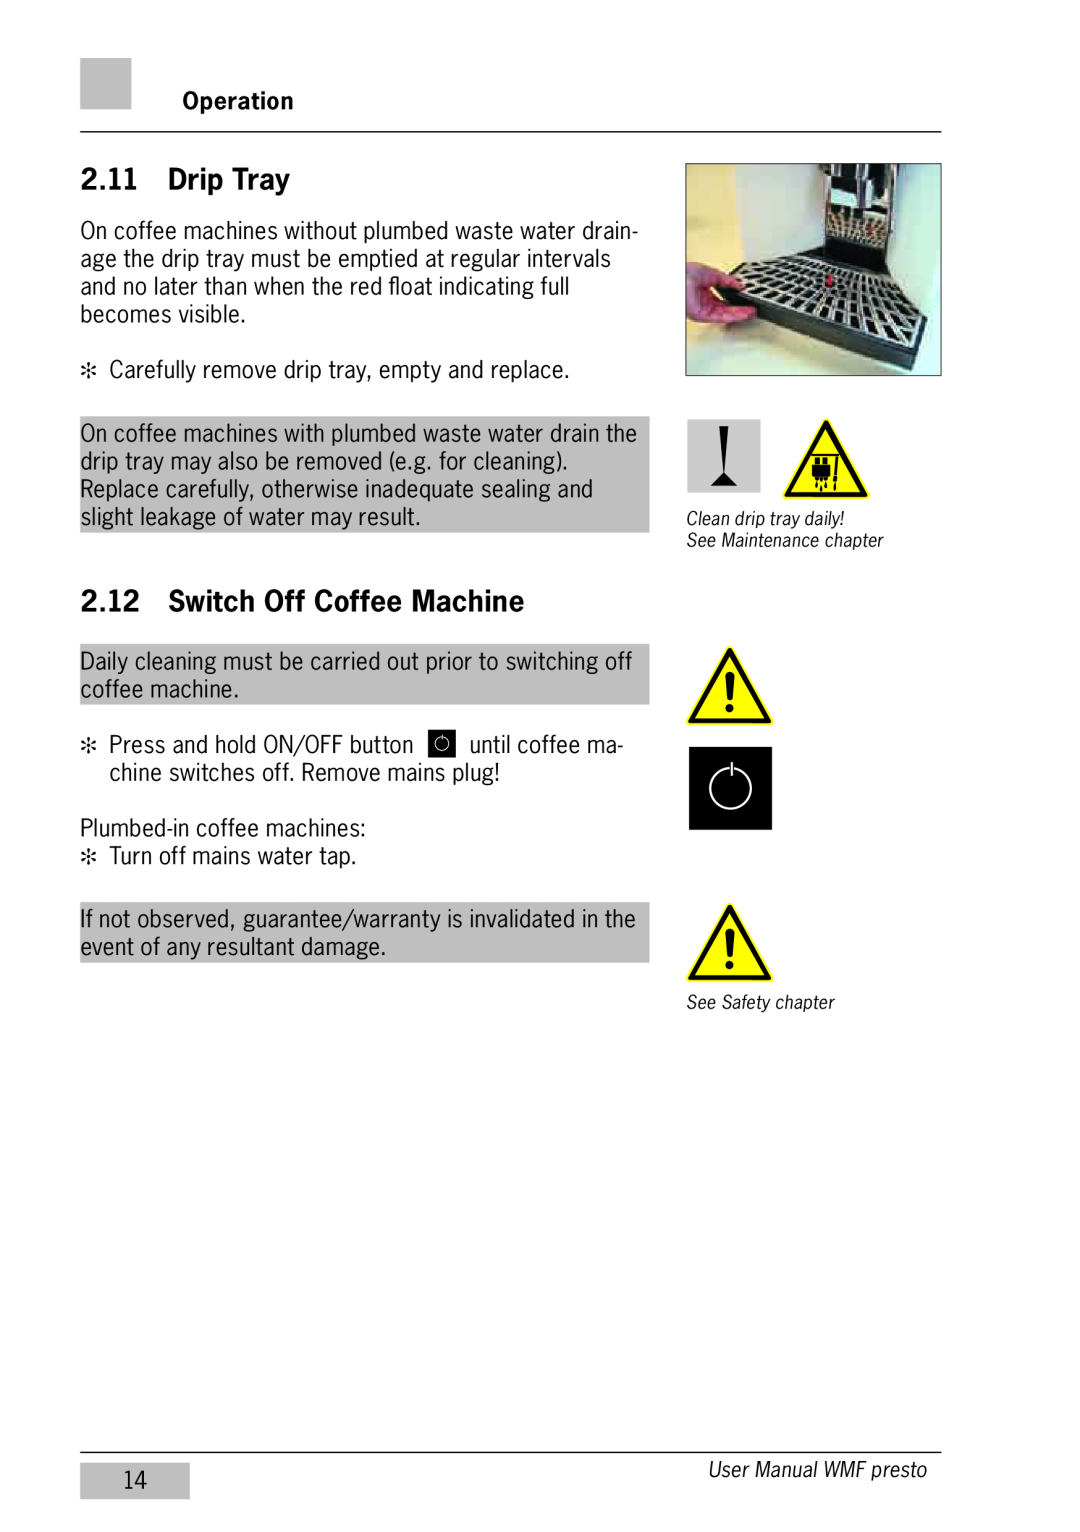 WMF Americas 1400 user manual Drip Tray, Switch Off Coffee Machine, Operation 